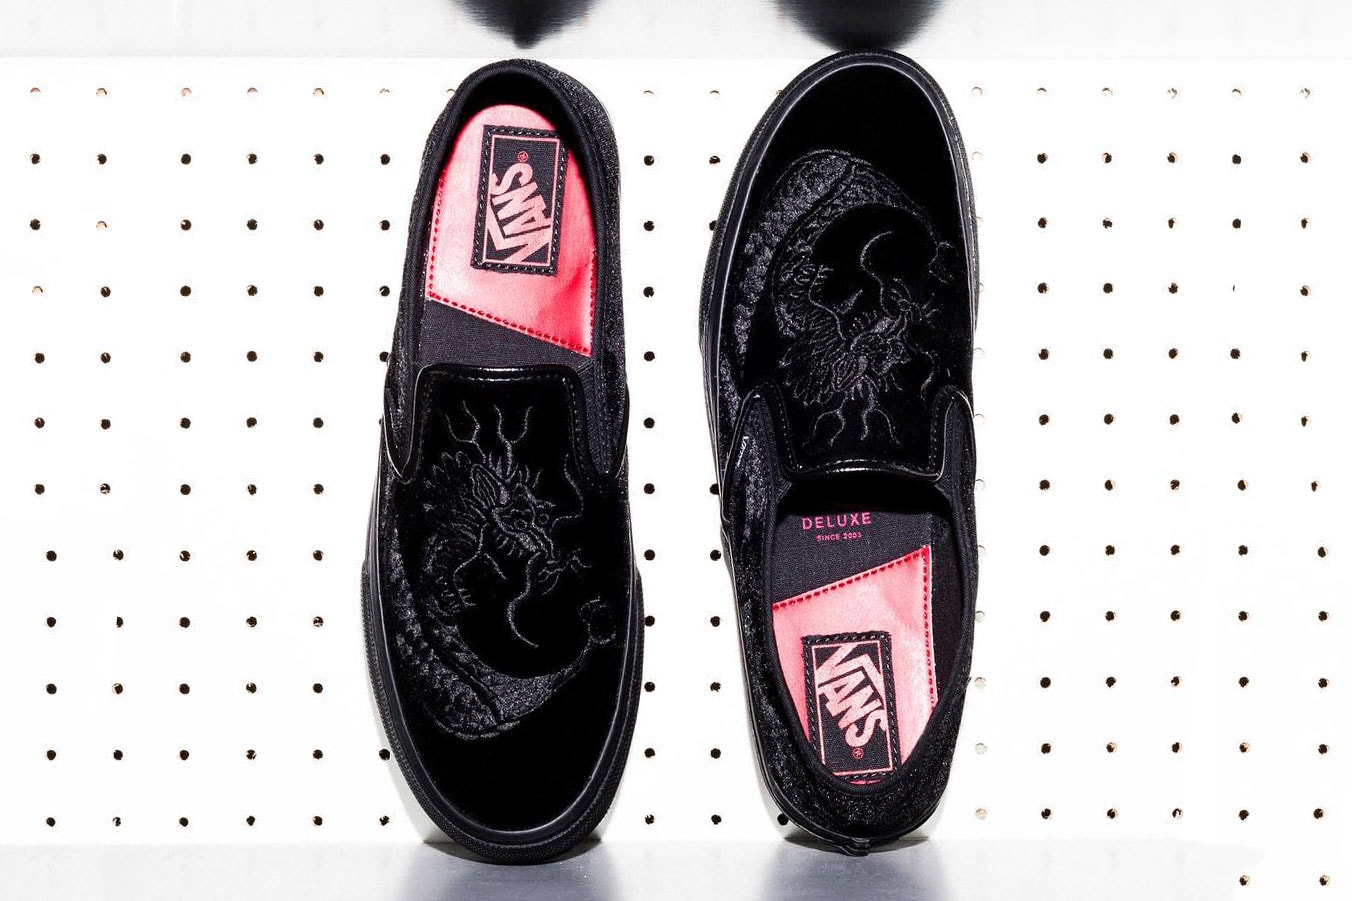 DELUXE Vans Classic Slip On velvet Dragon Preview black 2018 release date info drop sneakers shoes footwear collaboration hideki hue kimura